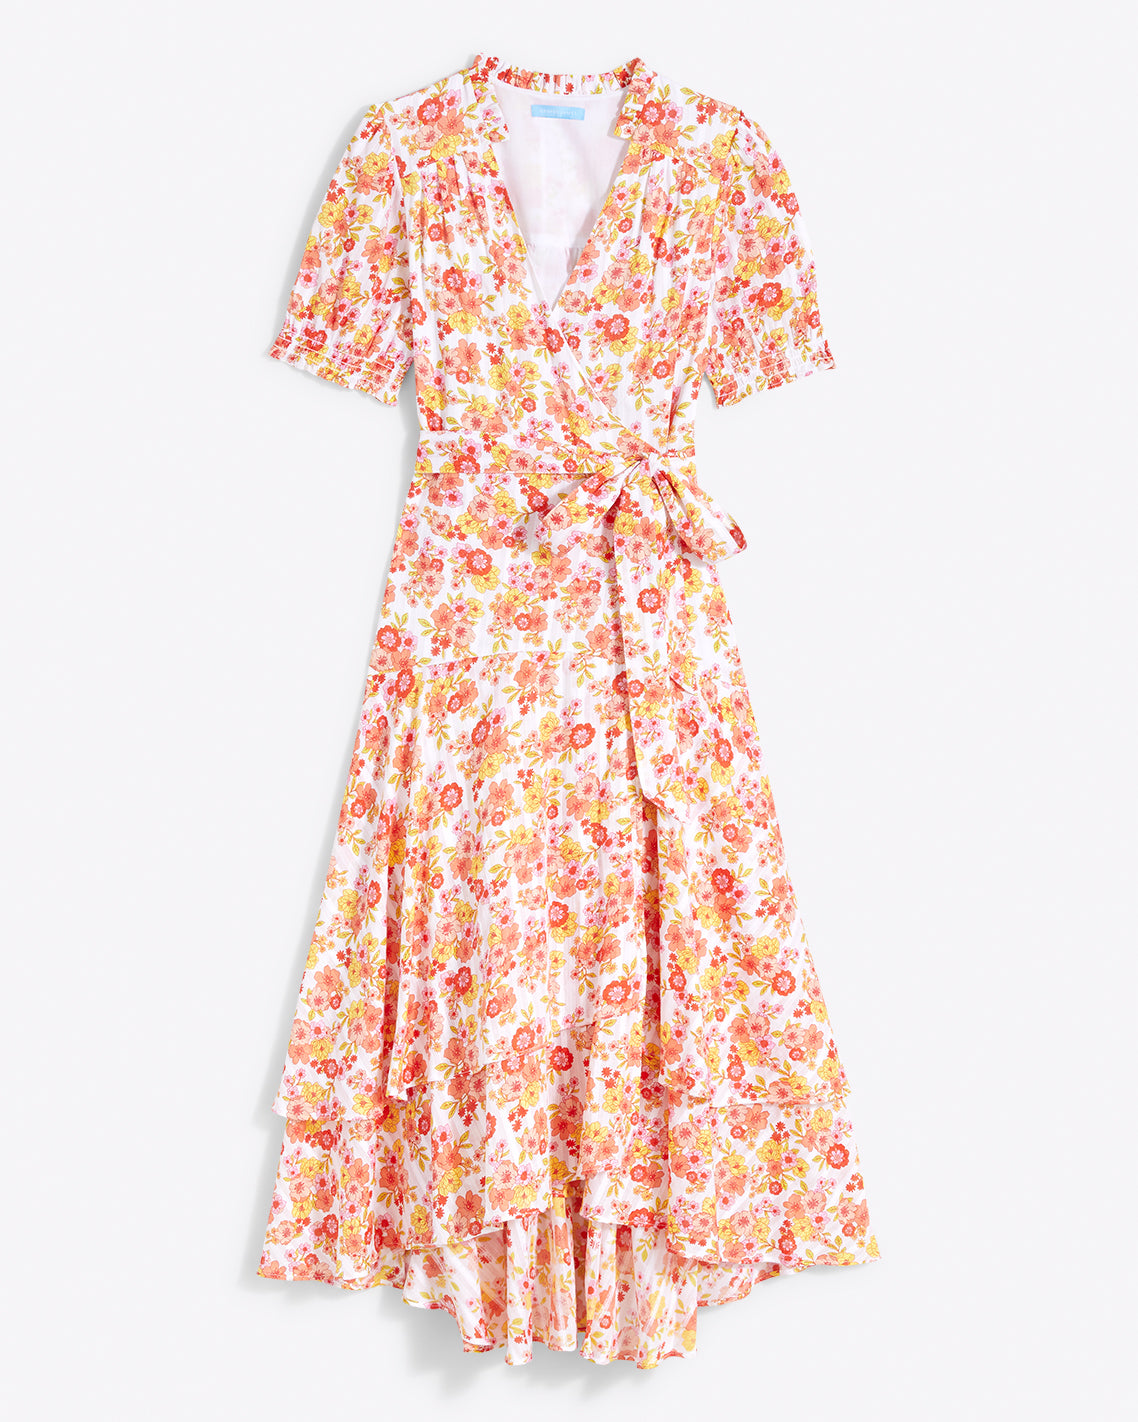 Naomi Wrap Dress in Field Blossom